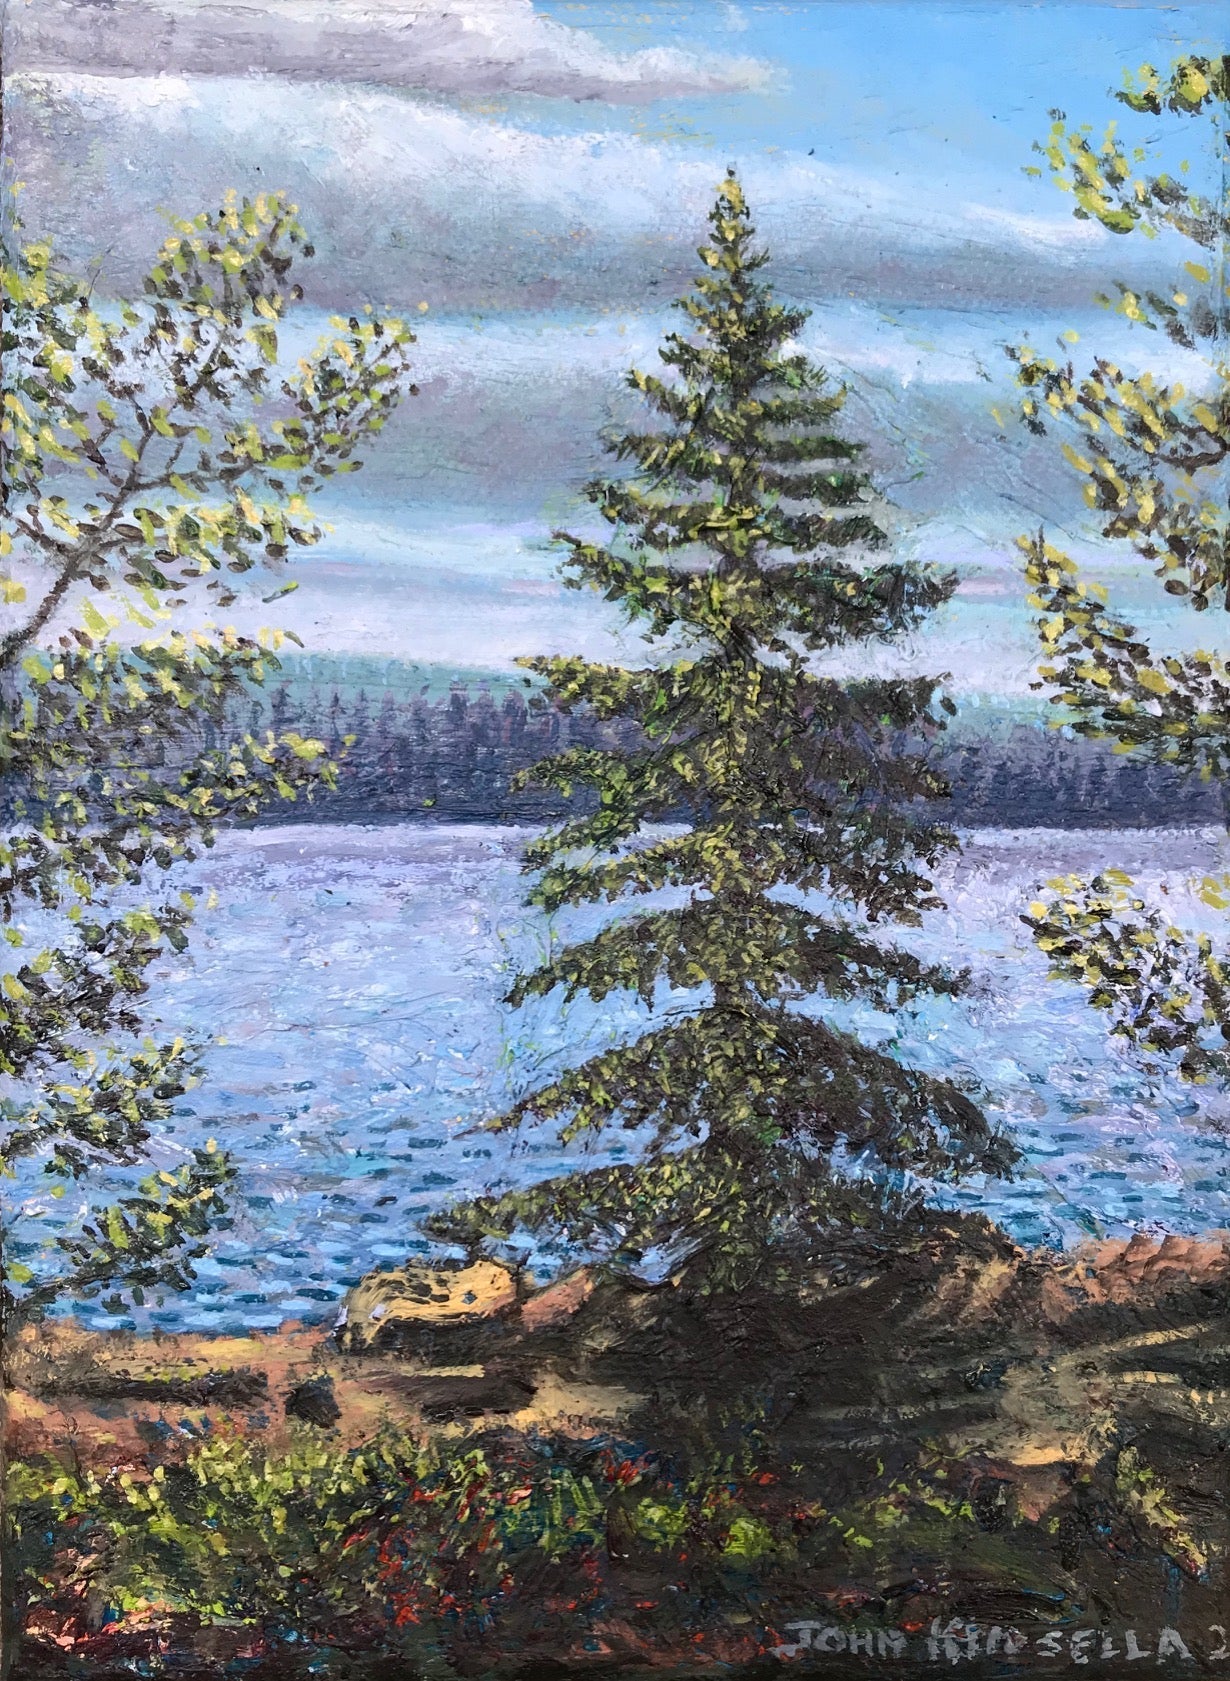 John Kinsella - Through the Trees, Rock Lake